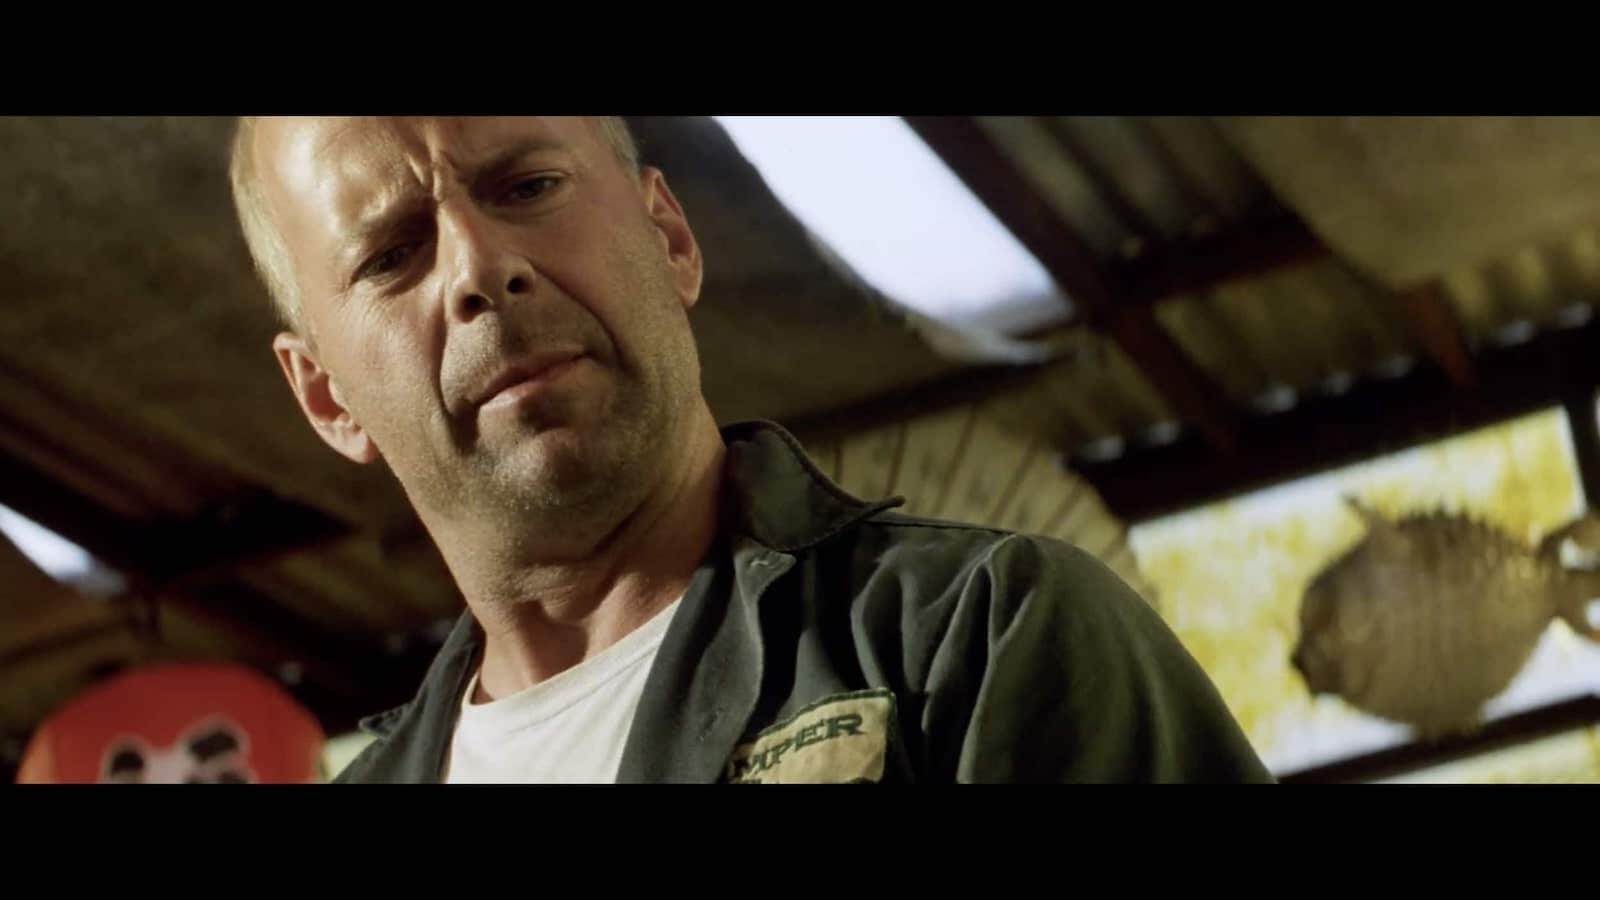 A Filmmaker's Guide to Michael Bay - Armageddon Dutch Angle Bruce Willis - StudioBinder Online Shot List Software